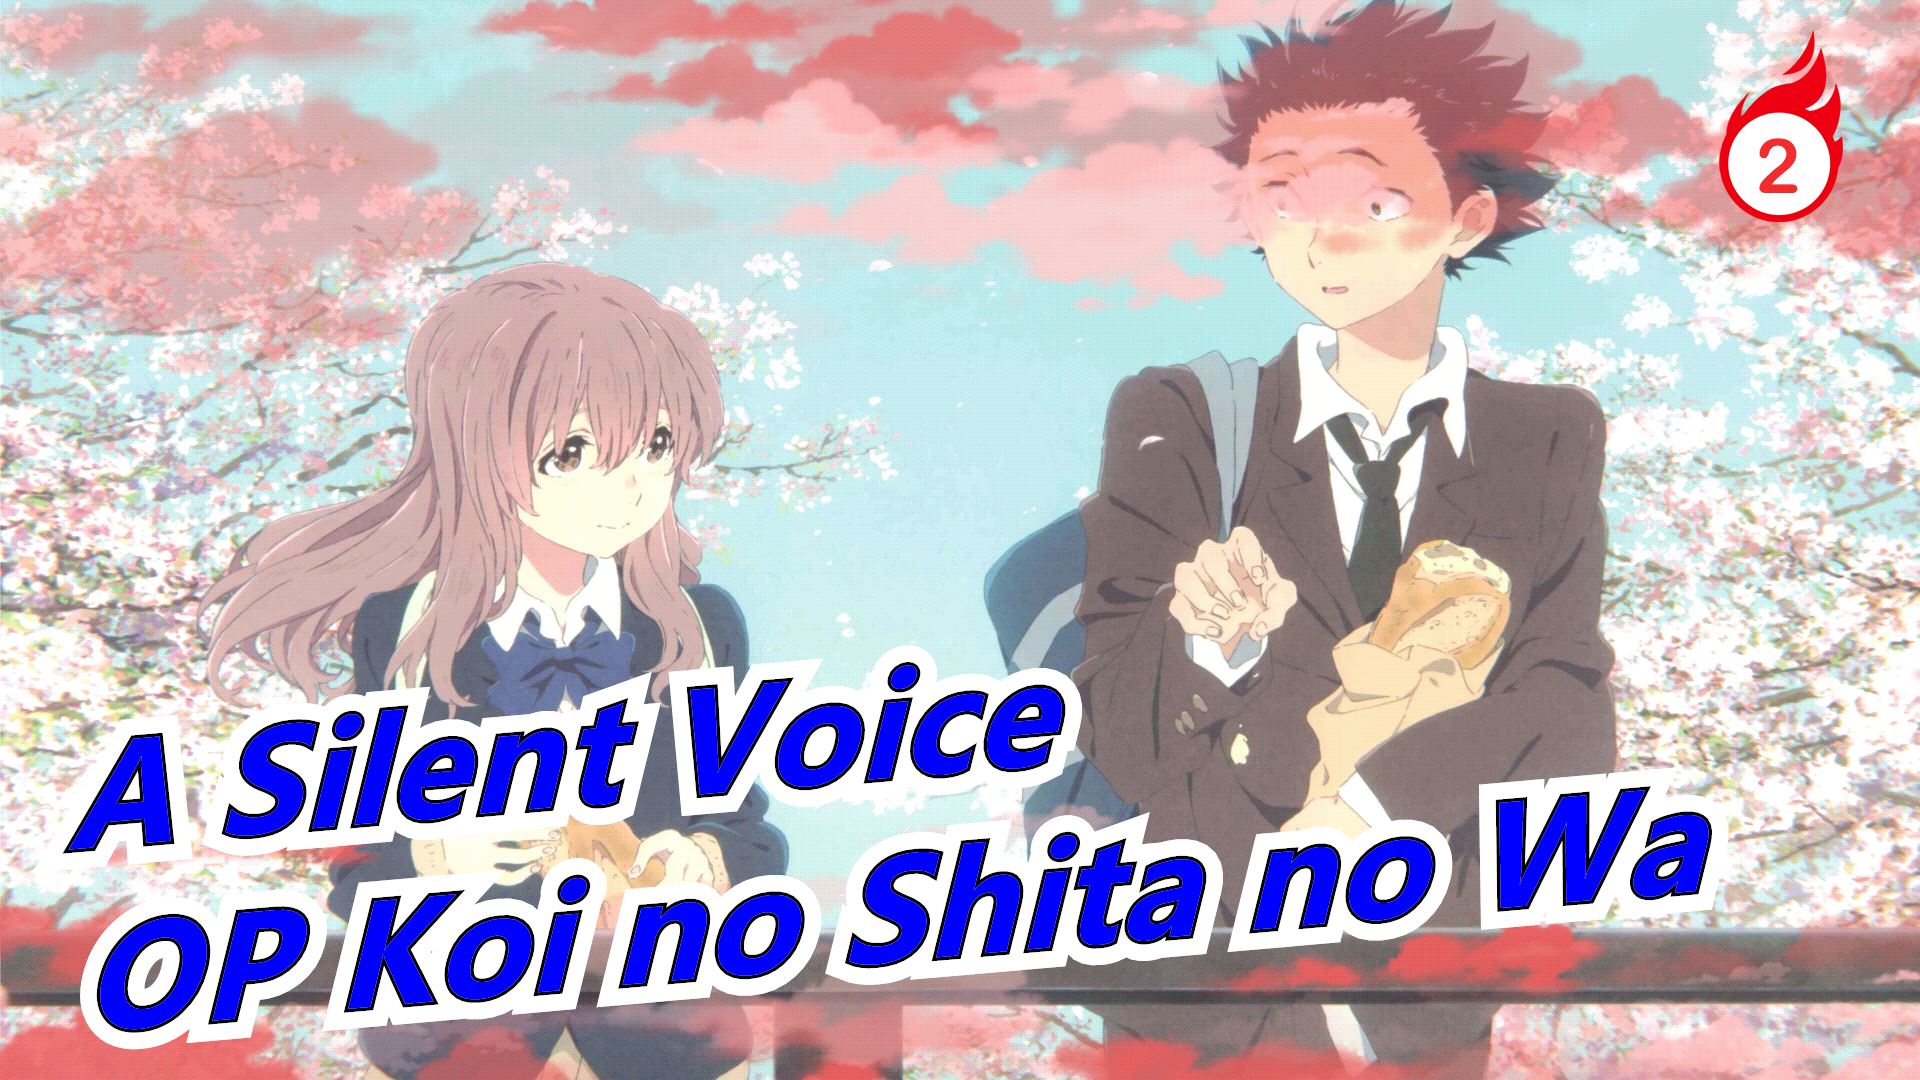 A Silent Voice] OP Koi no Shita no Wa (Full Ver)_2 - Bilibili